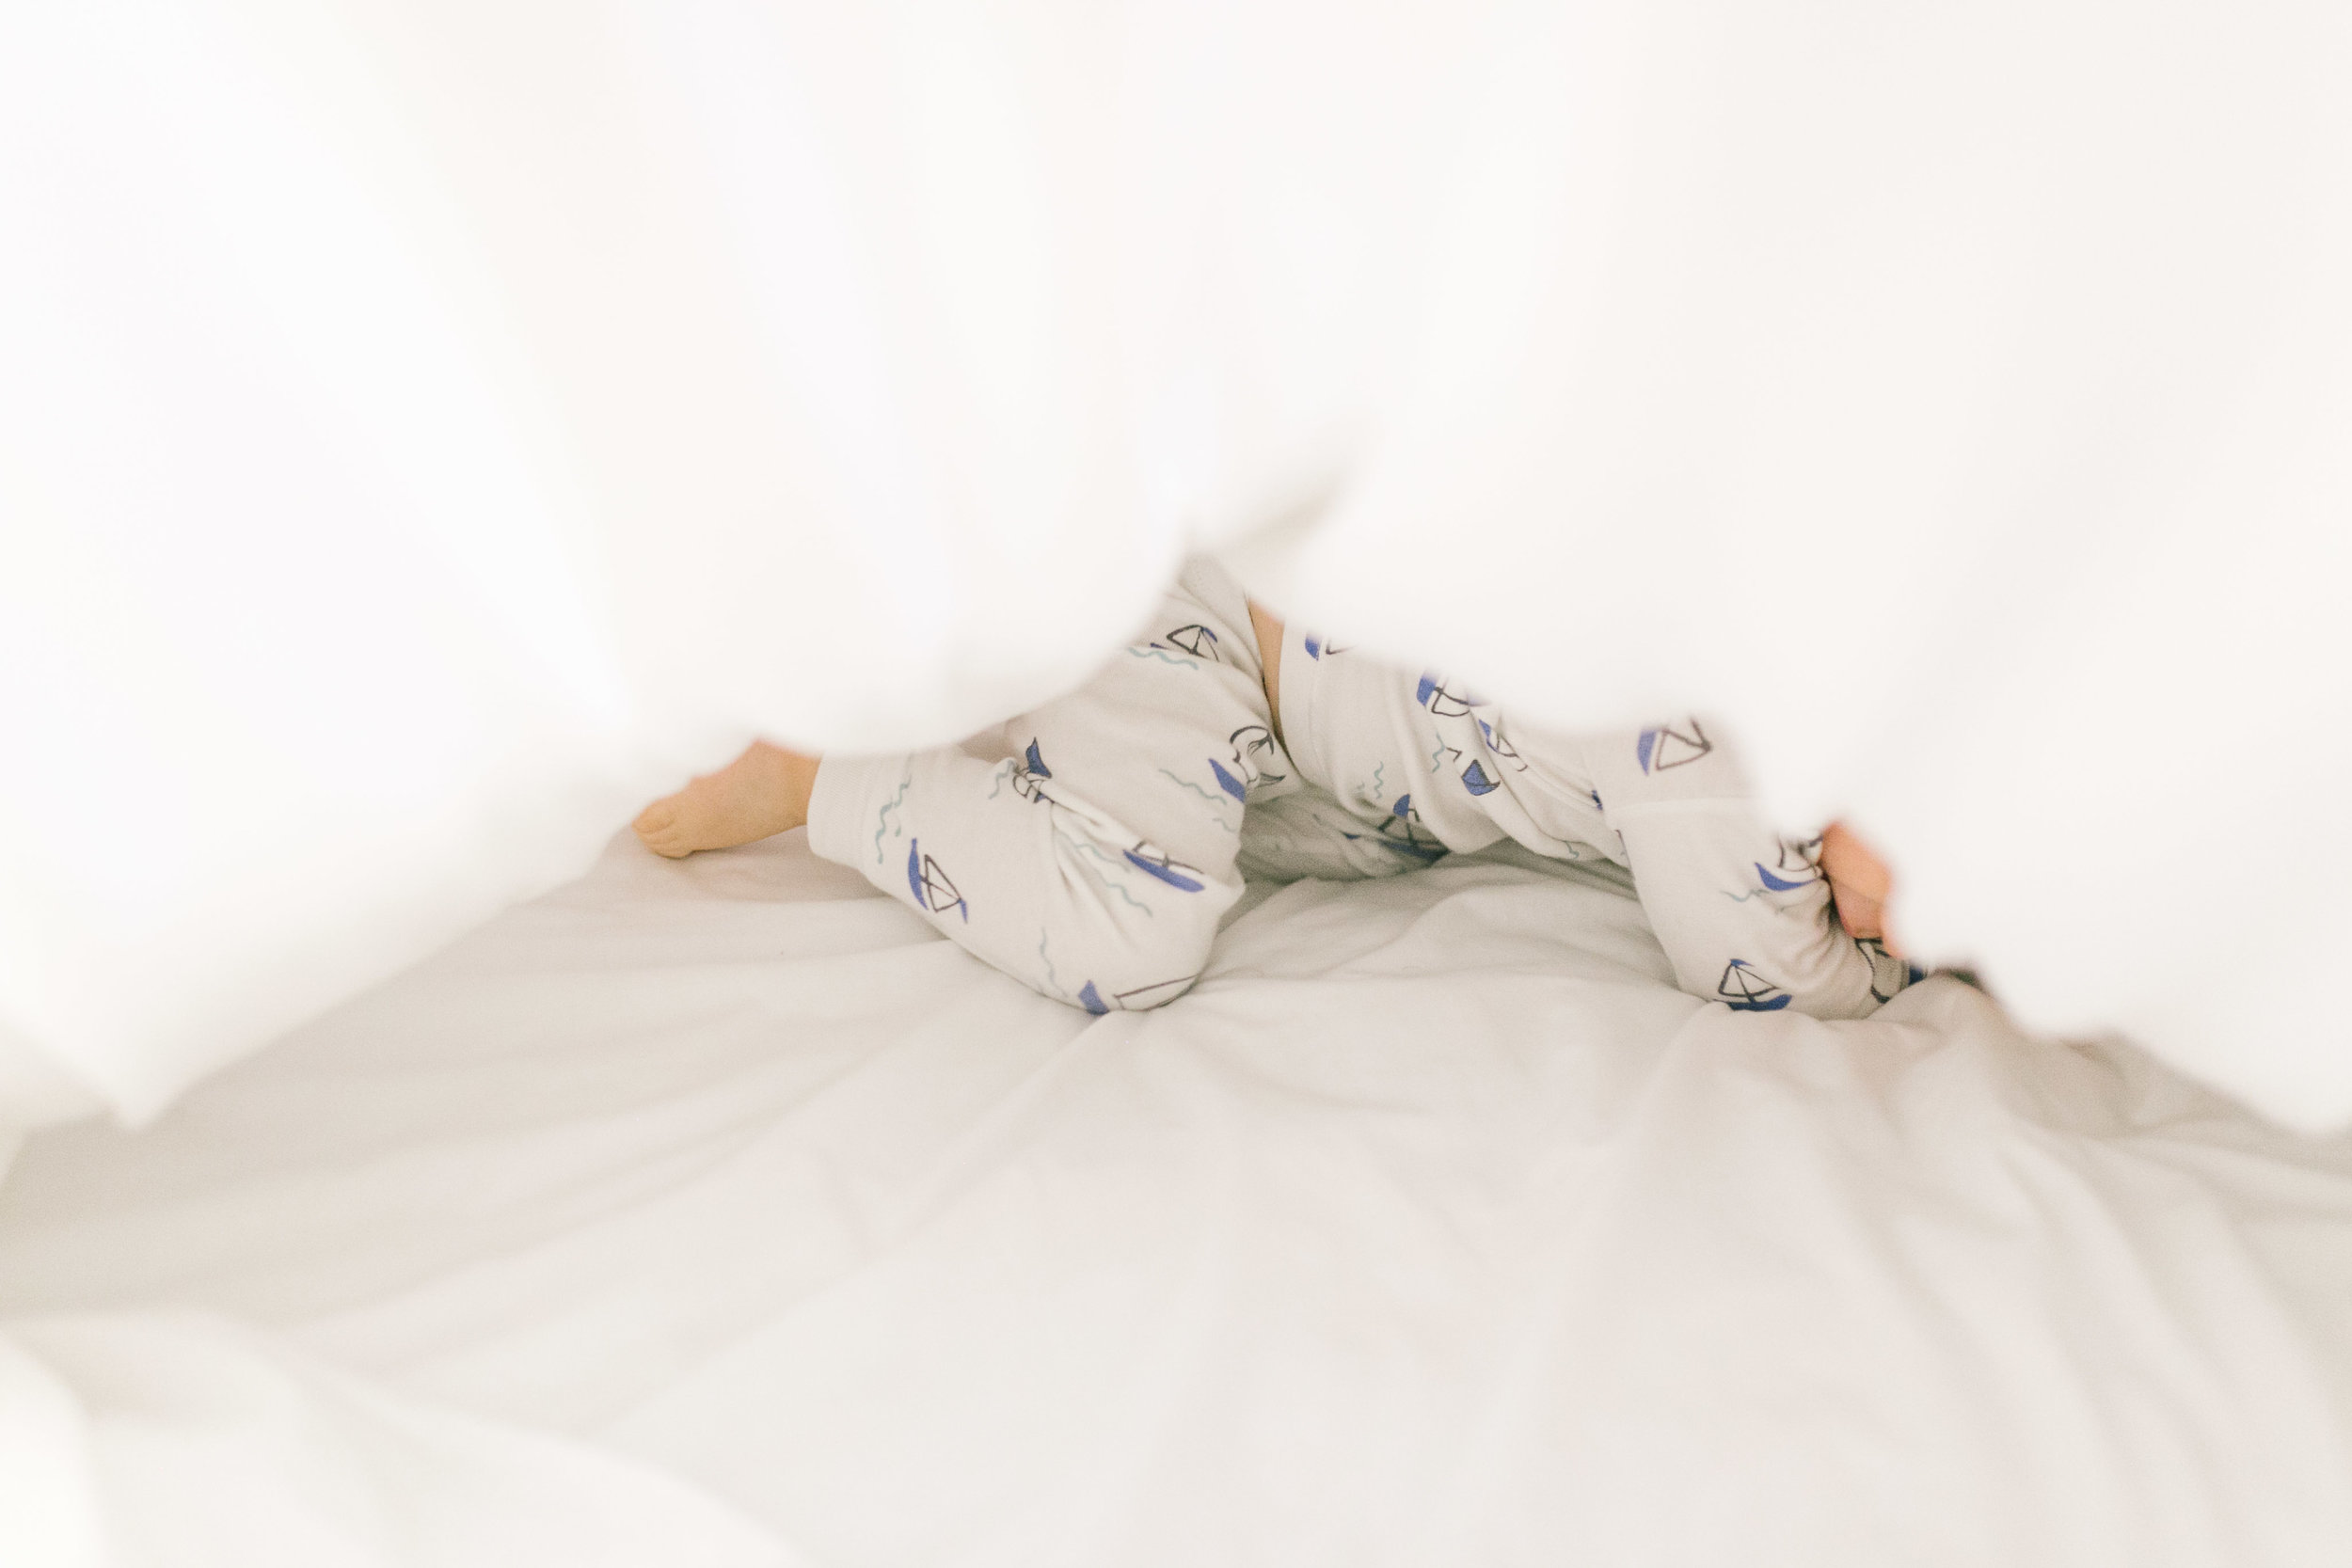 Playful toddler lifestyle portraits, documentary style photography | Chelsea Macor Photography-7.jpg